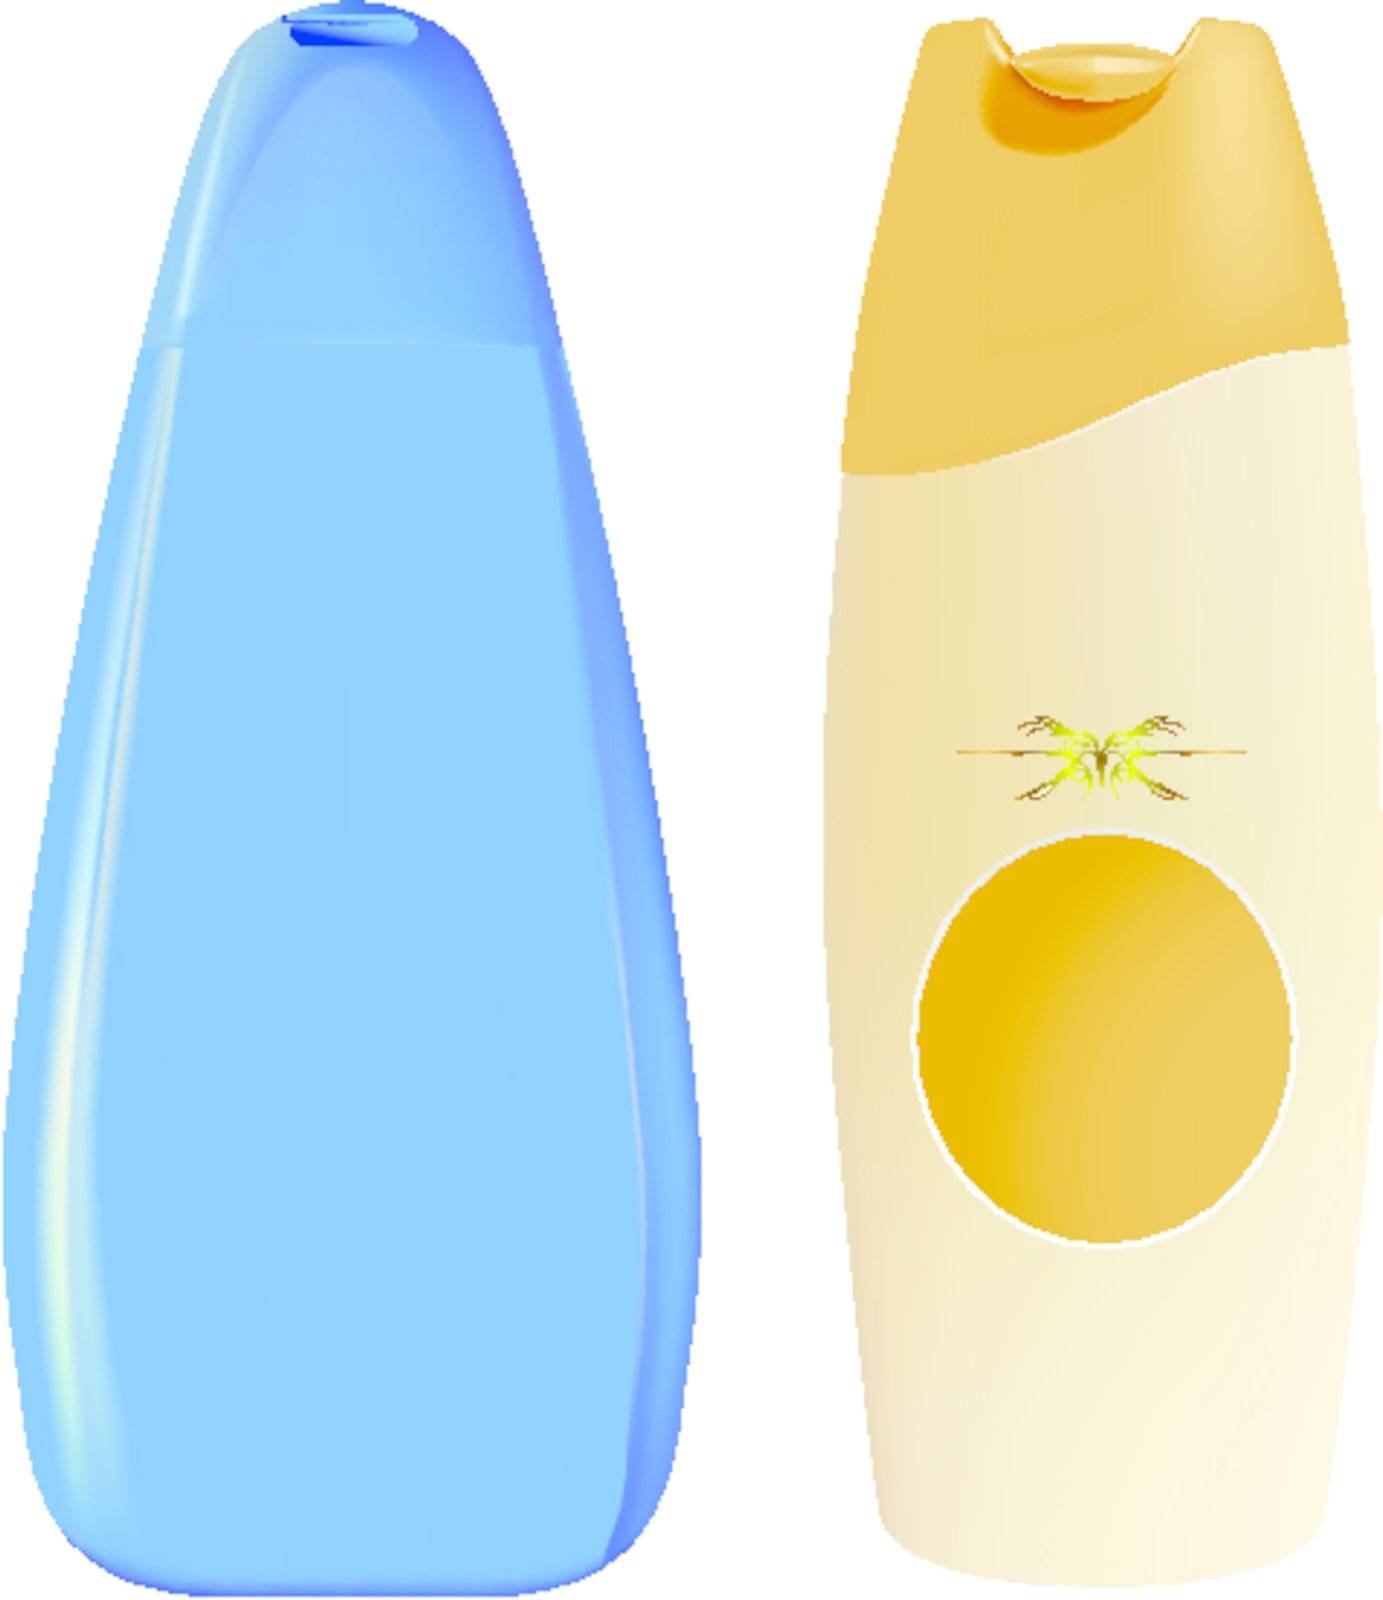 vector realistic shampoo bottles on white background